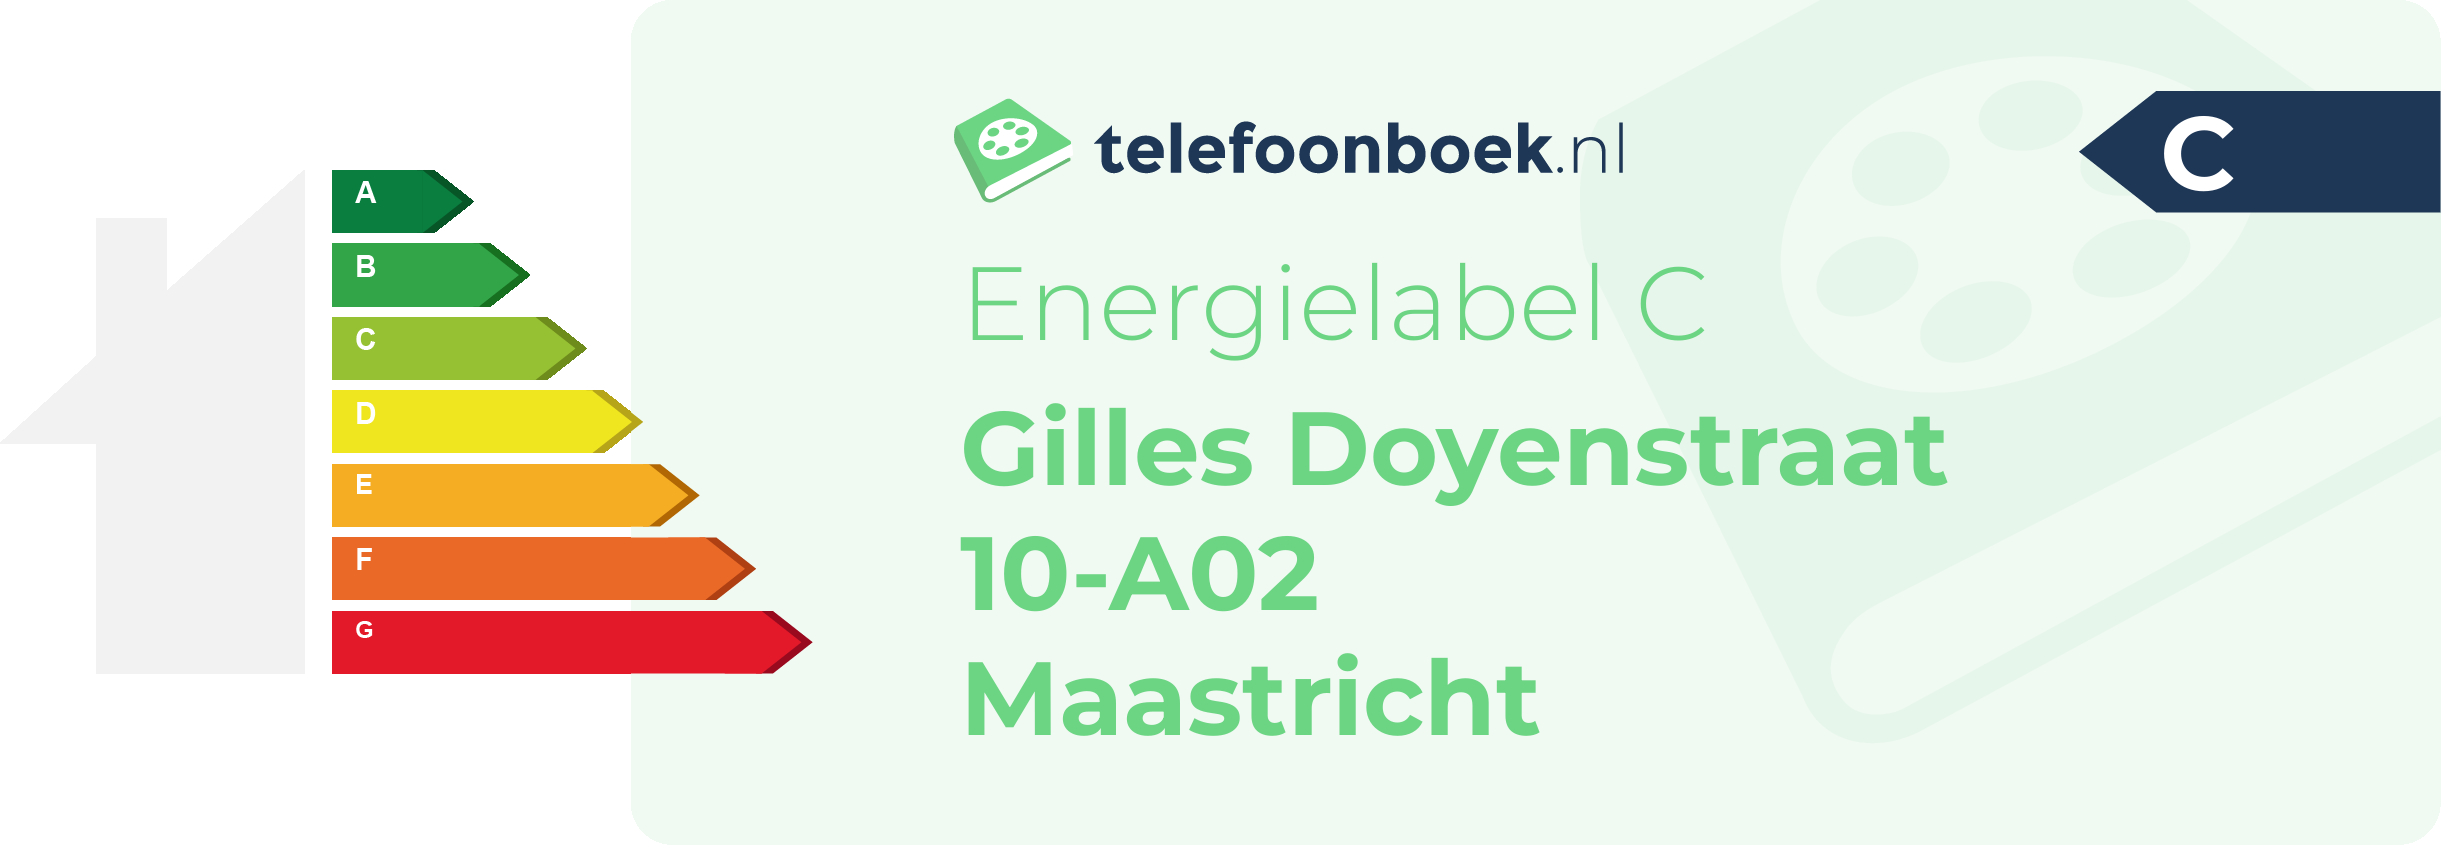 Energielabel Gilles Doyenstraat 10-A02 Maastricht